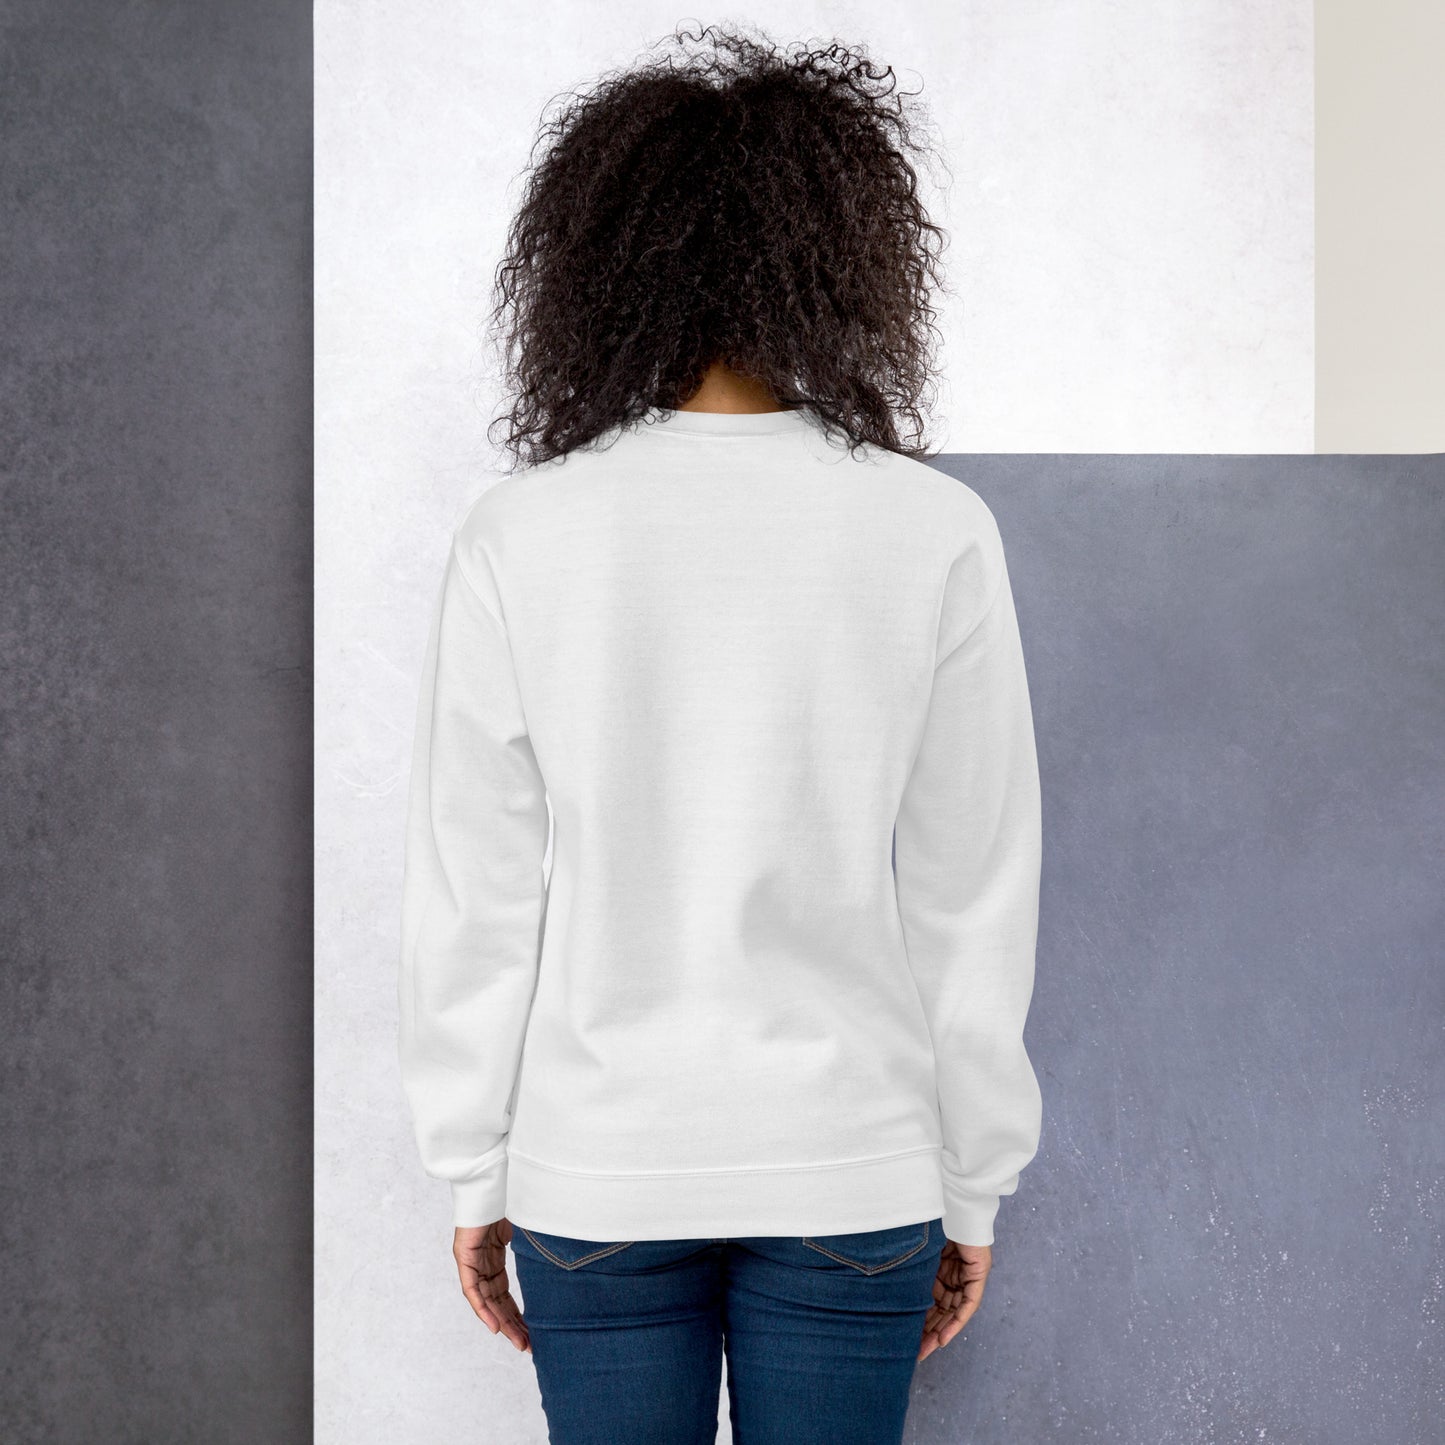 Turpan Unisex Sweatshirt for woman